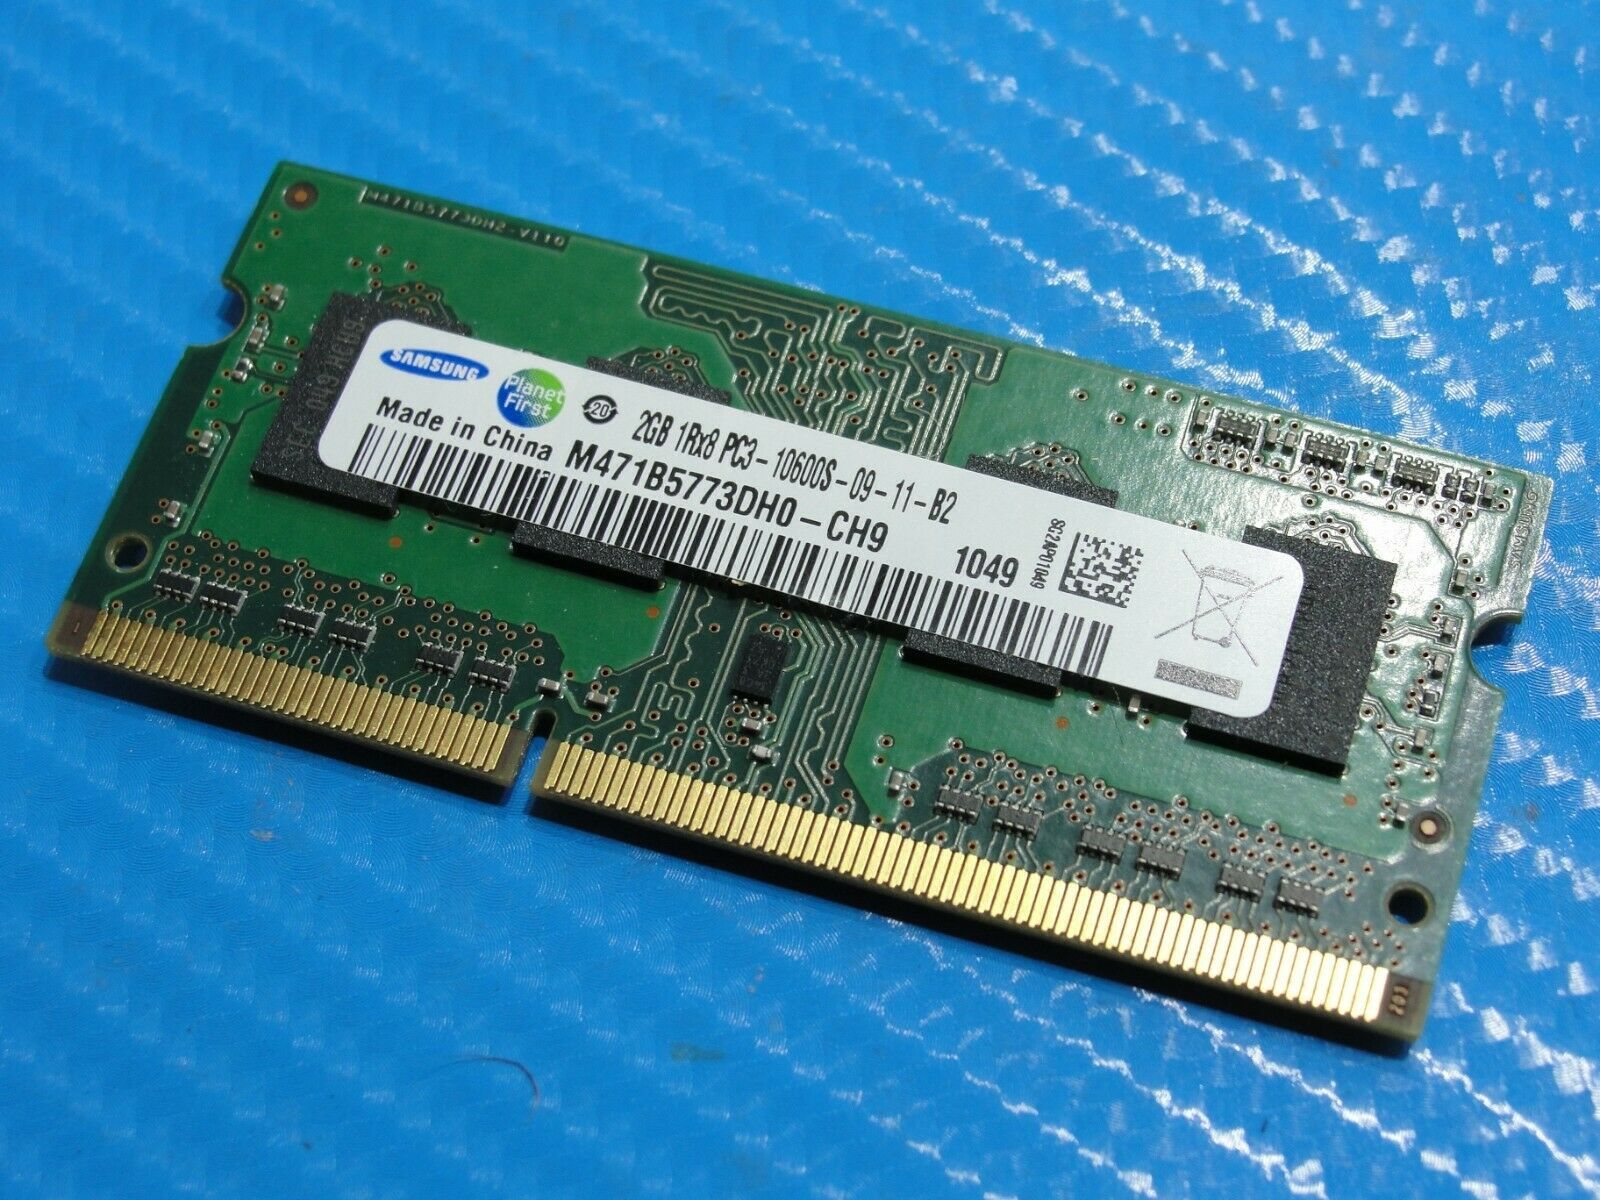 Lenovo 12.1 X201 Samsung SIDIMM RAM Memory 2GB M471B5773DH0-CH9 55Y3713 Samsung